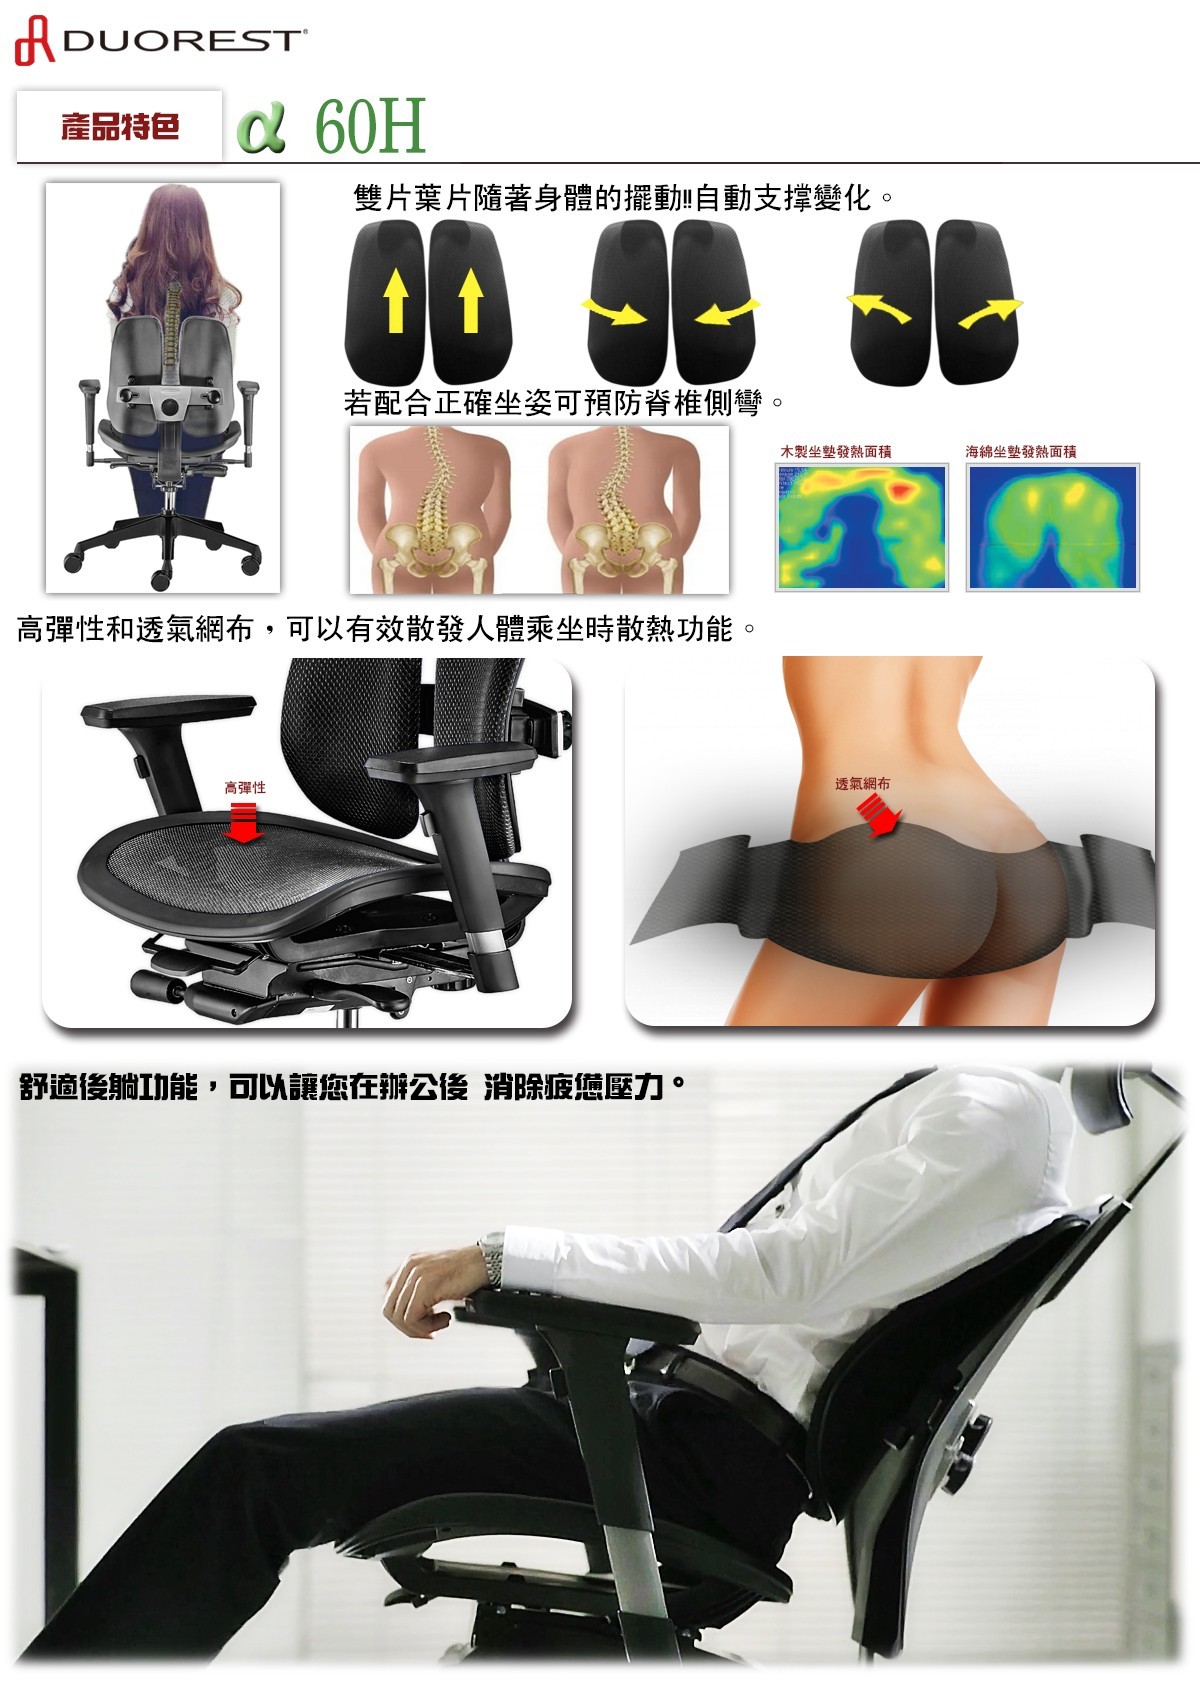 DUOREST-ALPHA 60H雙背椅/雙背網椅產品特色說明